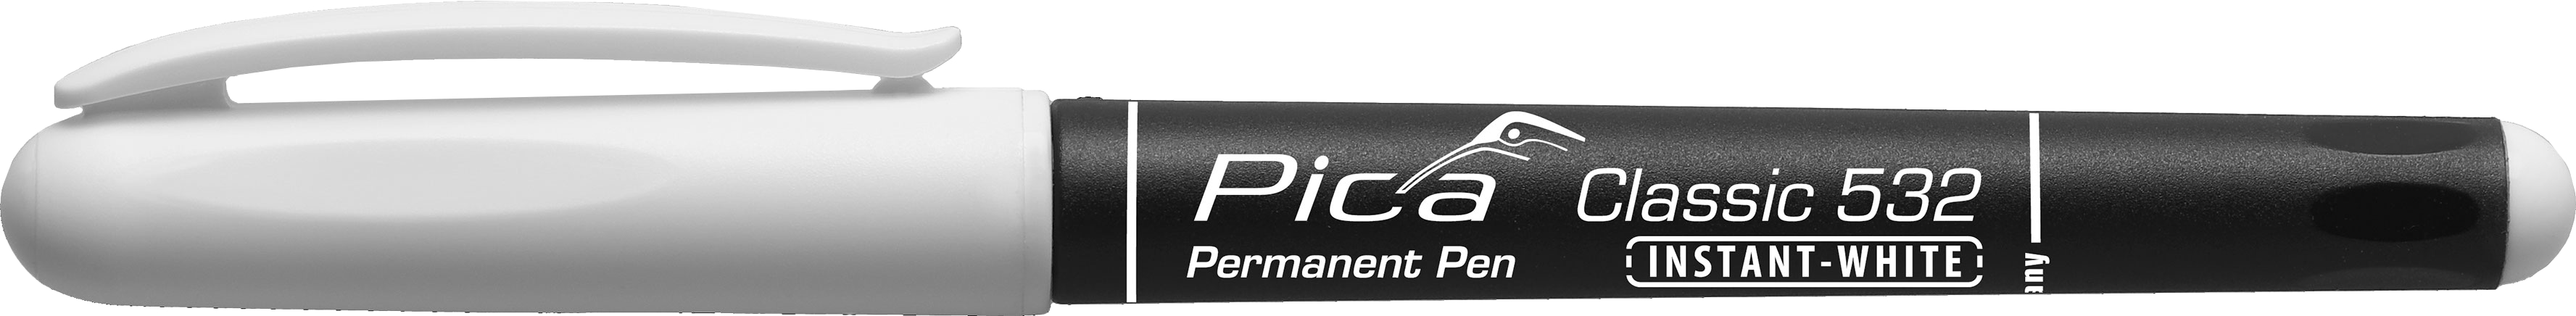 PICA Classic Permanent Pen Instant-White, 532/52/SB, weiß